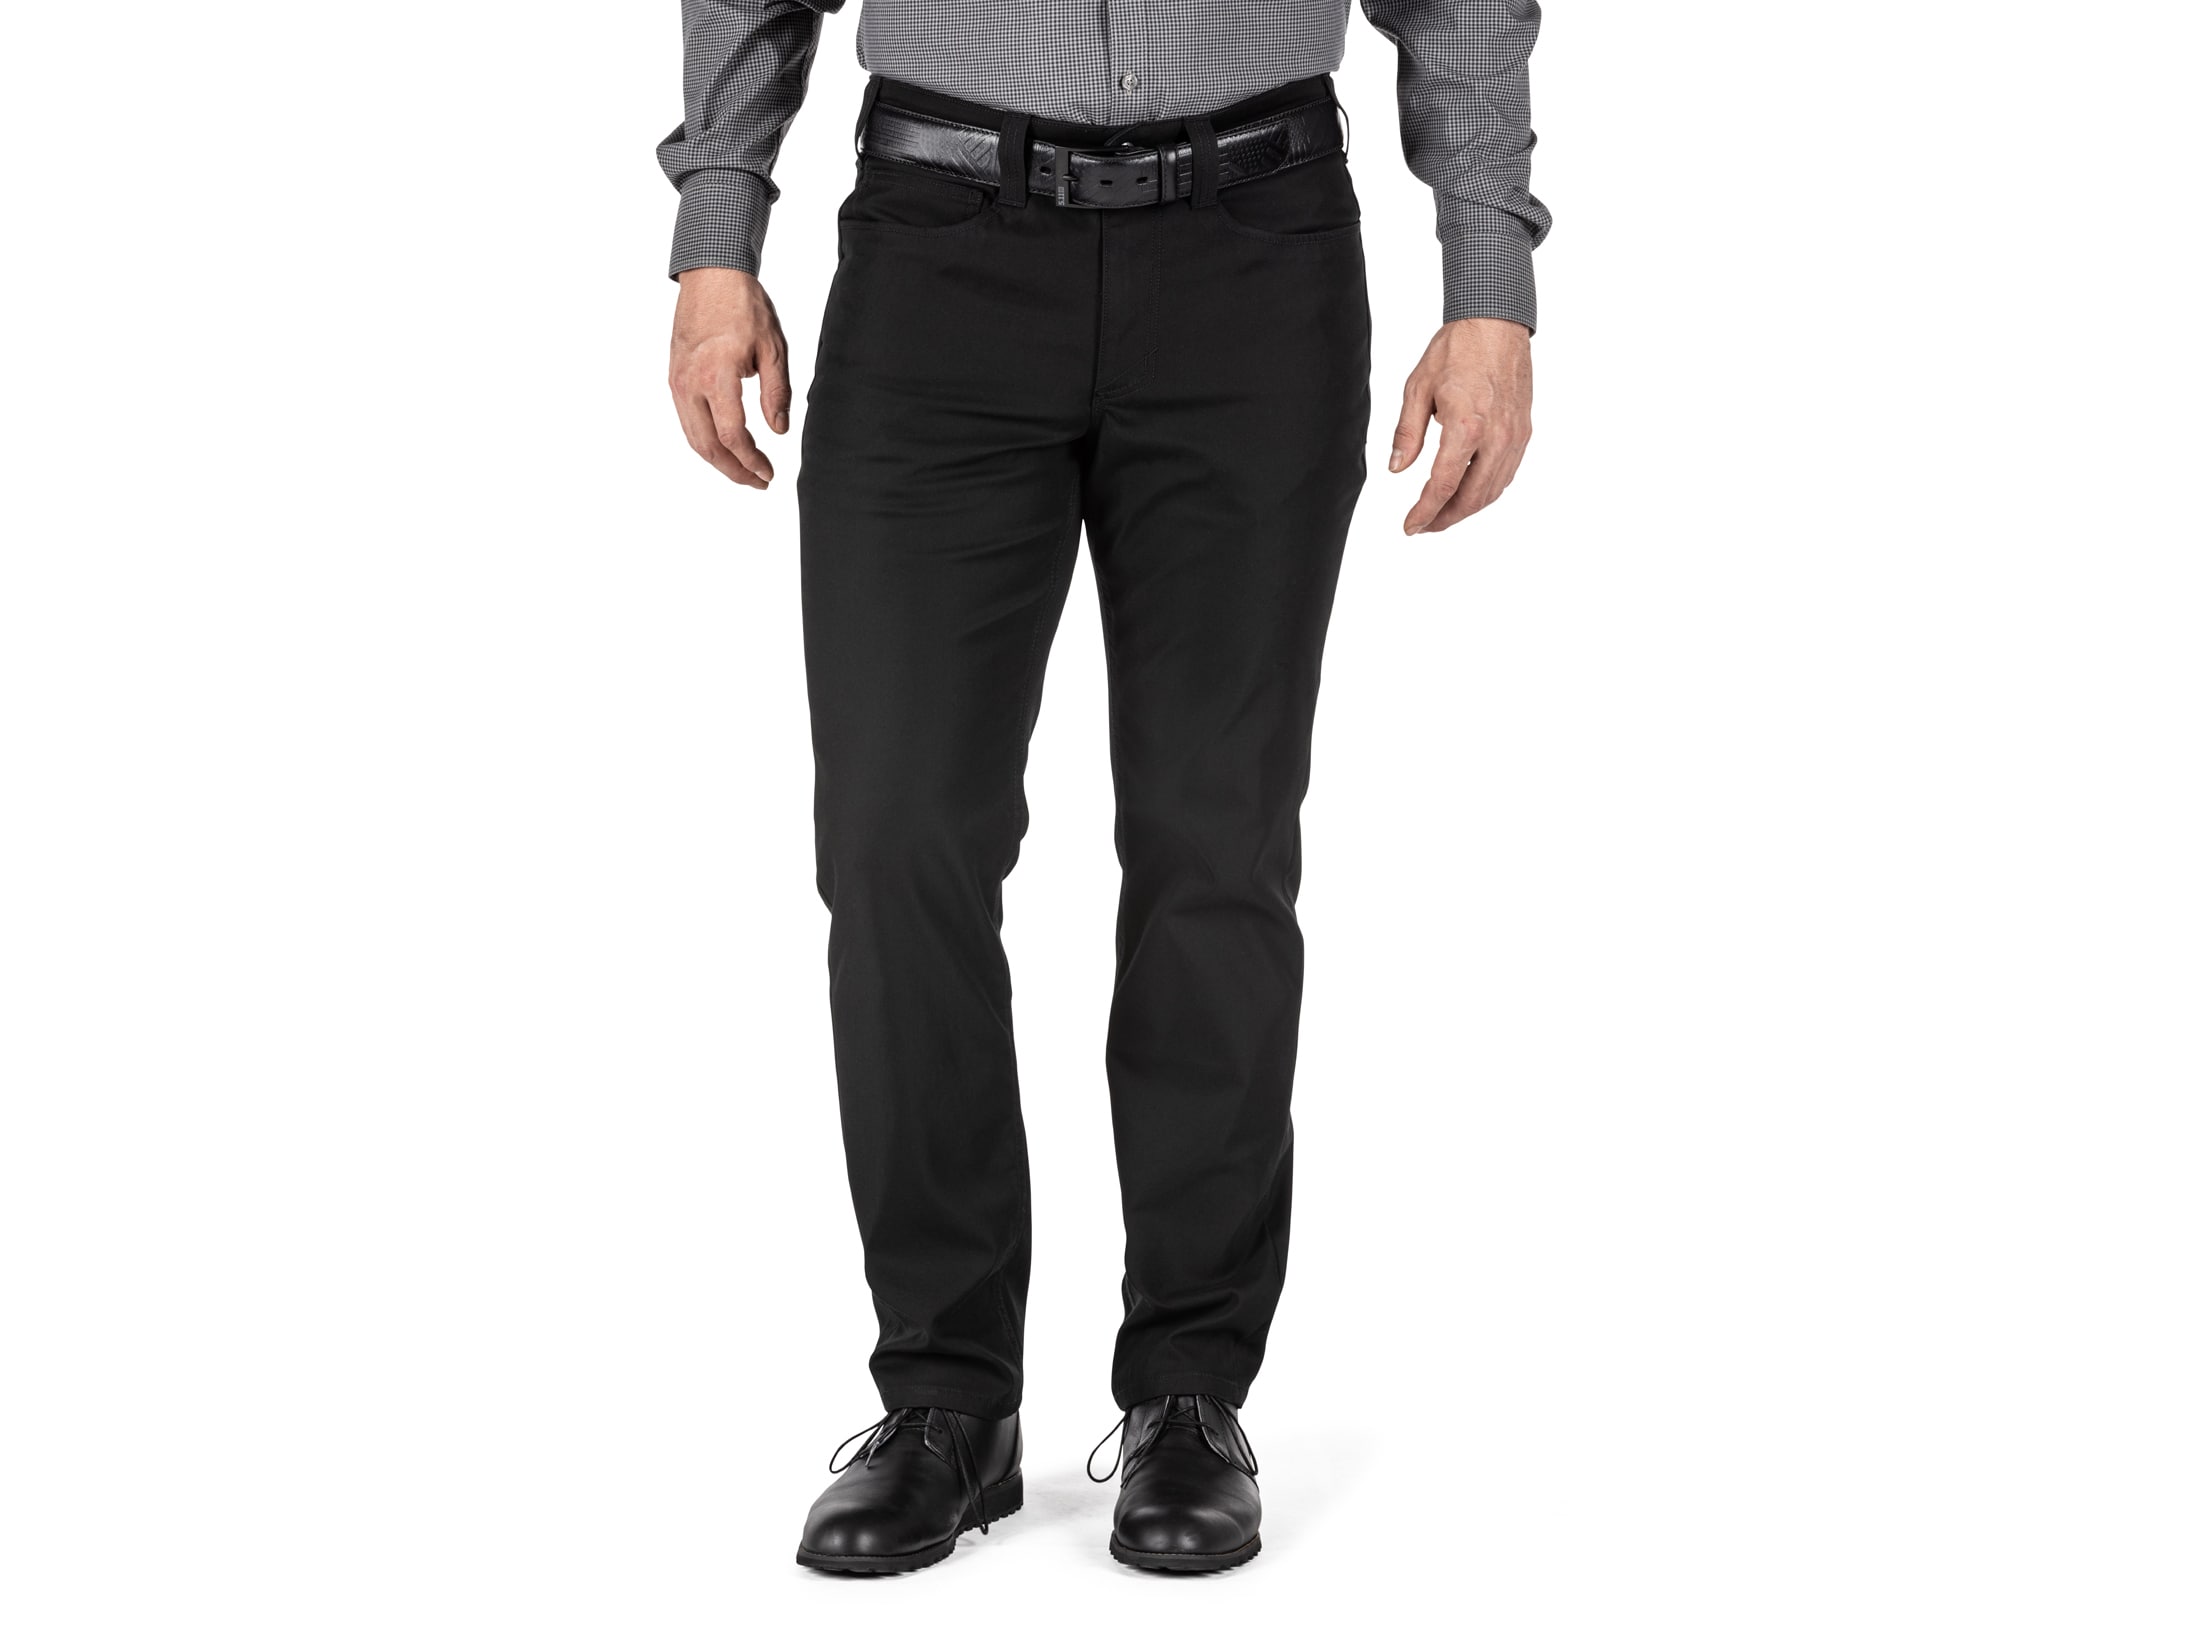 5.11 Men's Defender-Flex Urban Pants Polyester/Cotton Flex-Tac Black